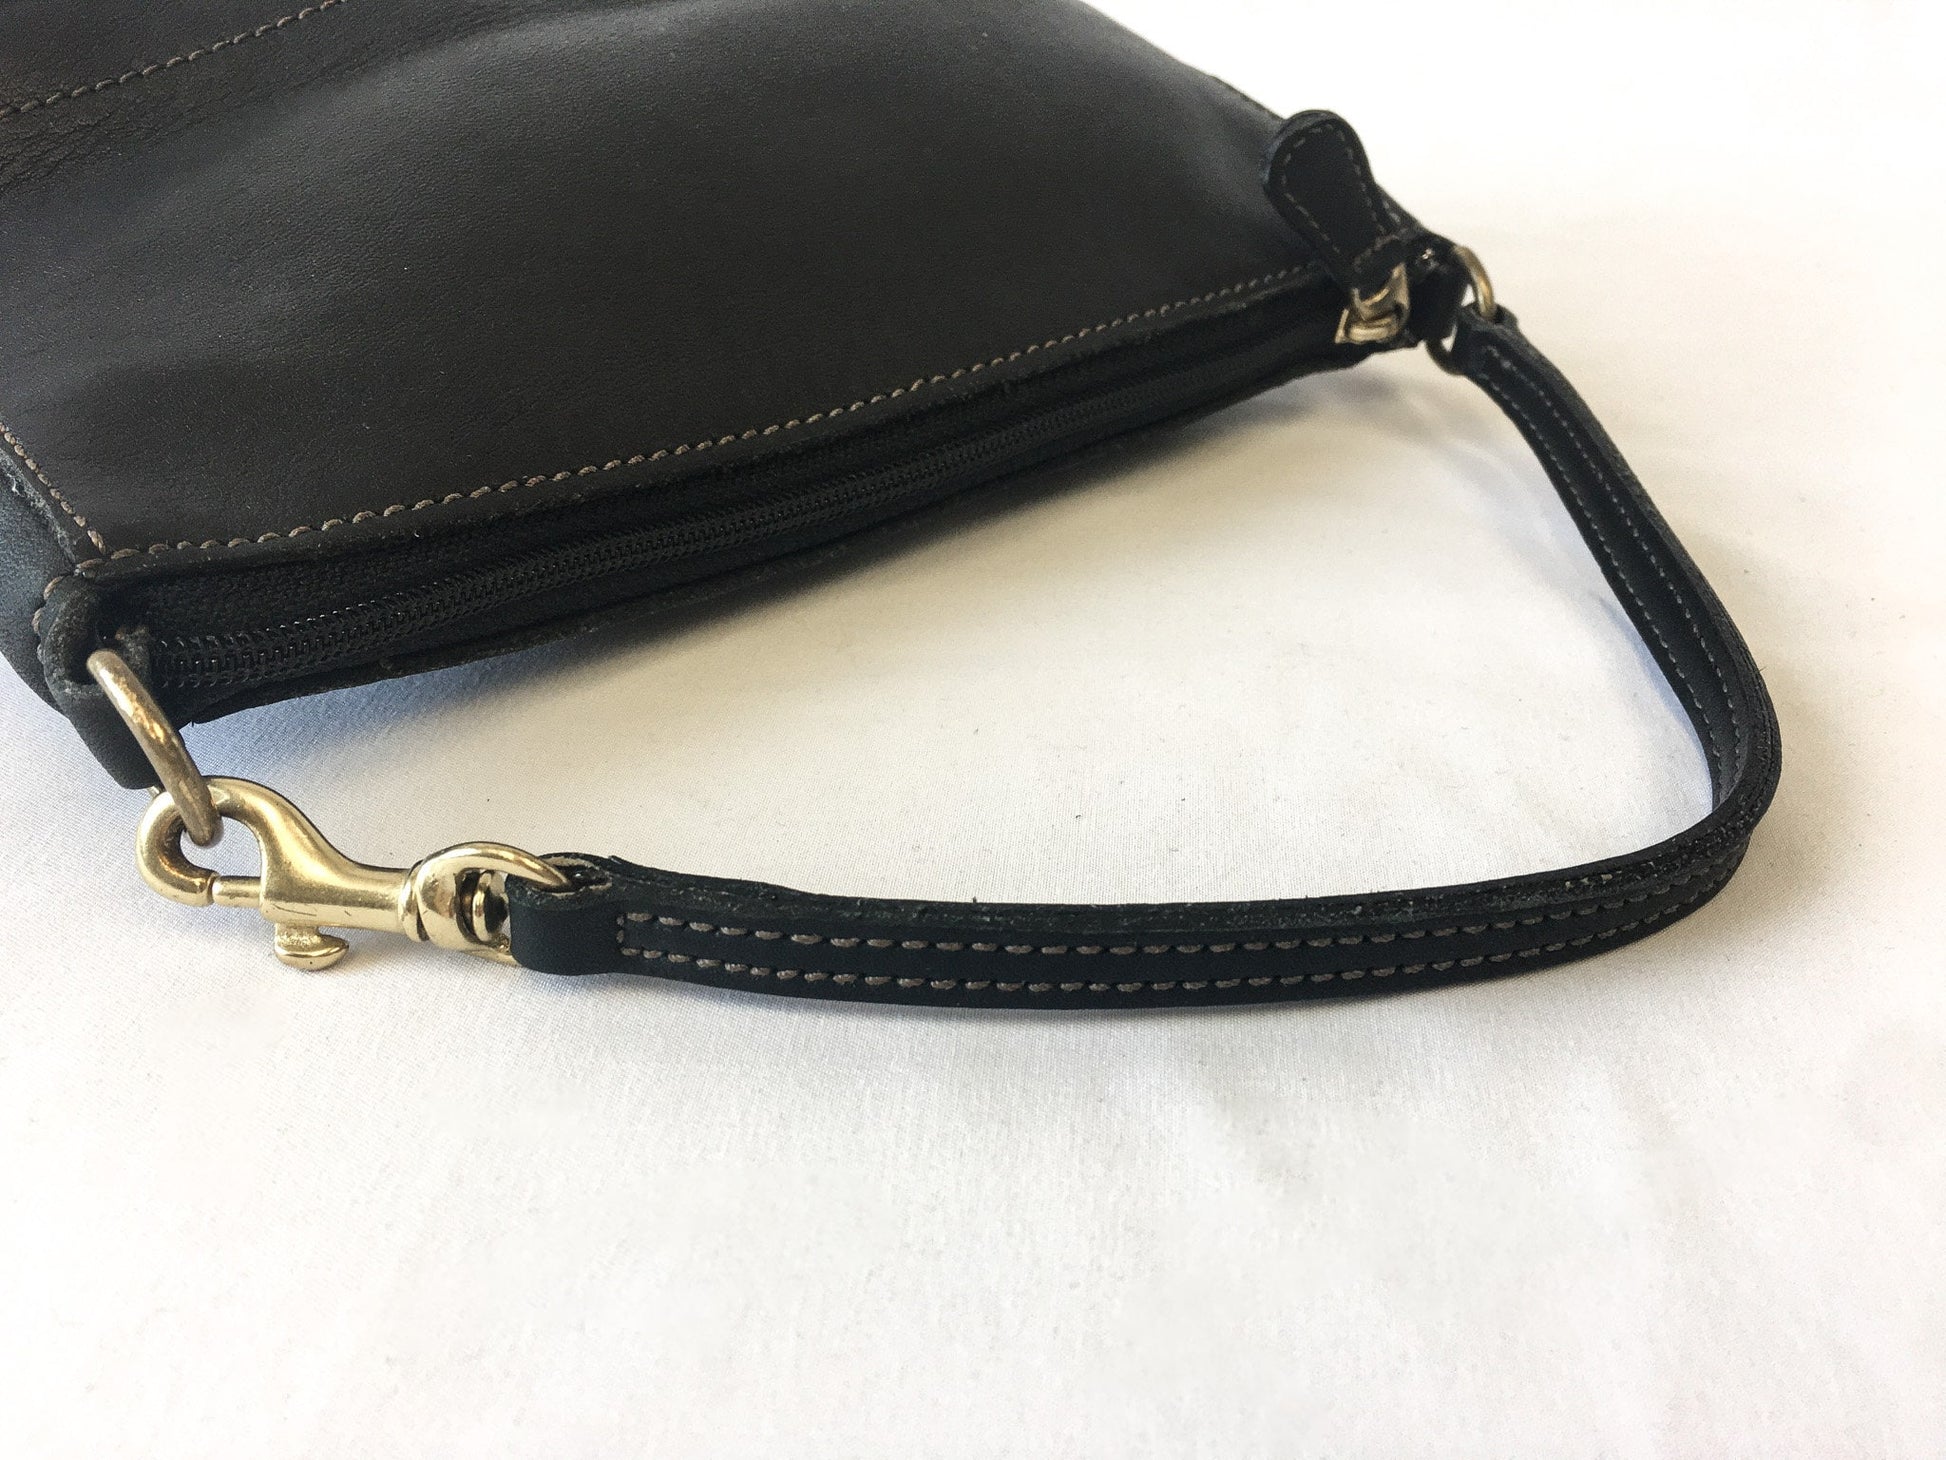 Vintage COACH Bleeker Black Leather Bag, Style #9311, Vintage Coach Clutch Handbag